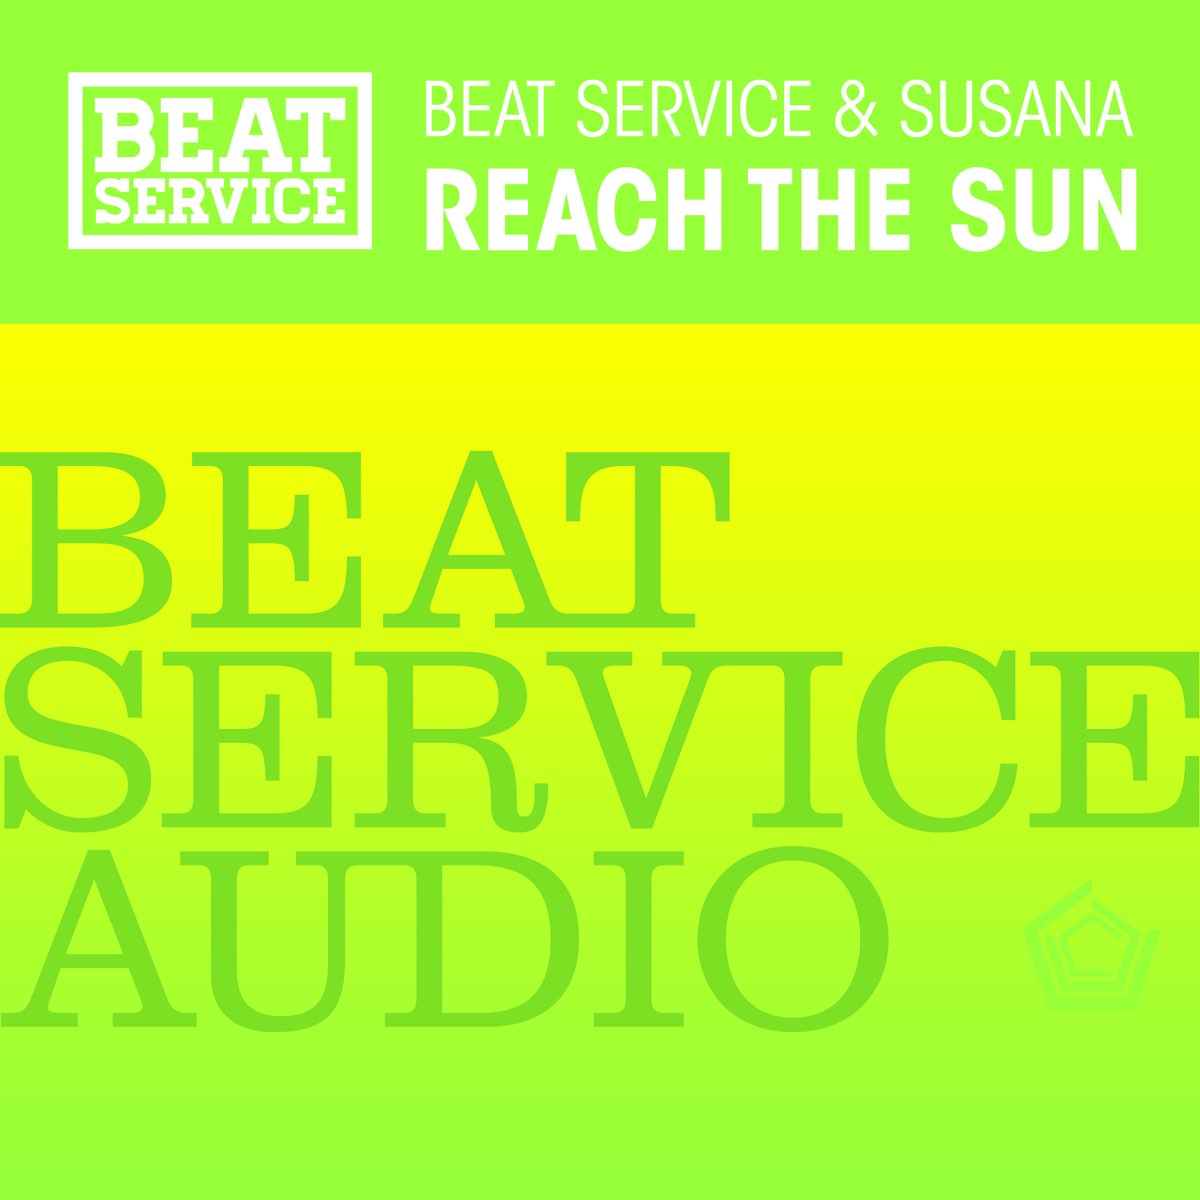 Beat service. Reach the Sun. Sun service. Sun Audio. Beat service - not this time (Original).